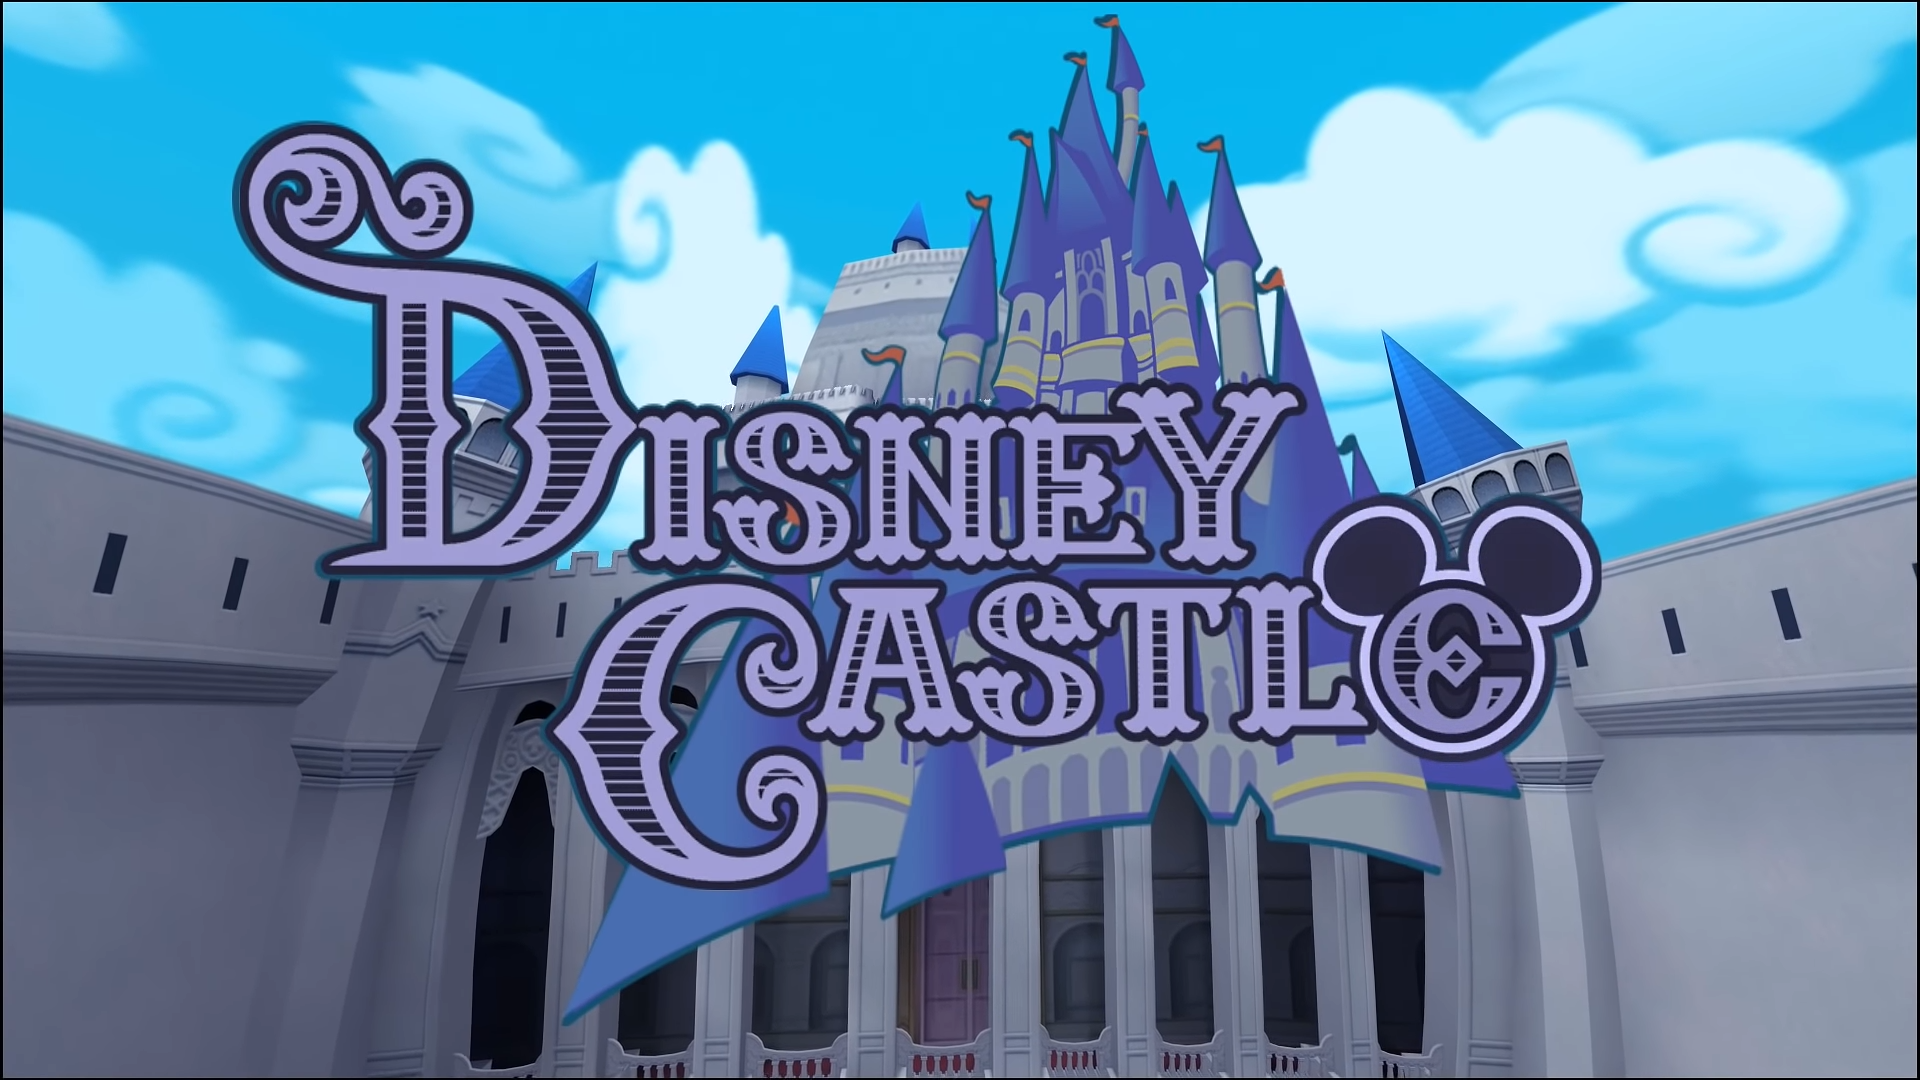 "Kingdom Hearts II". 2007. Square Enix. Disney. Disney Castle title card.